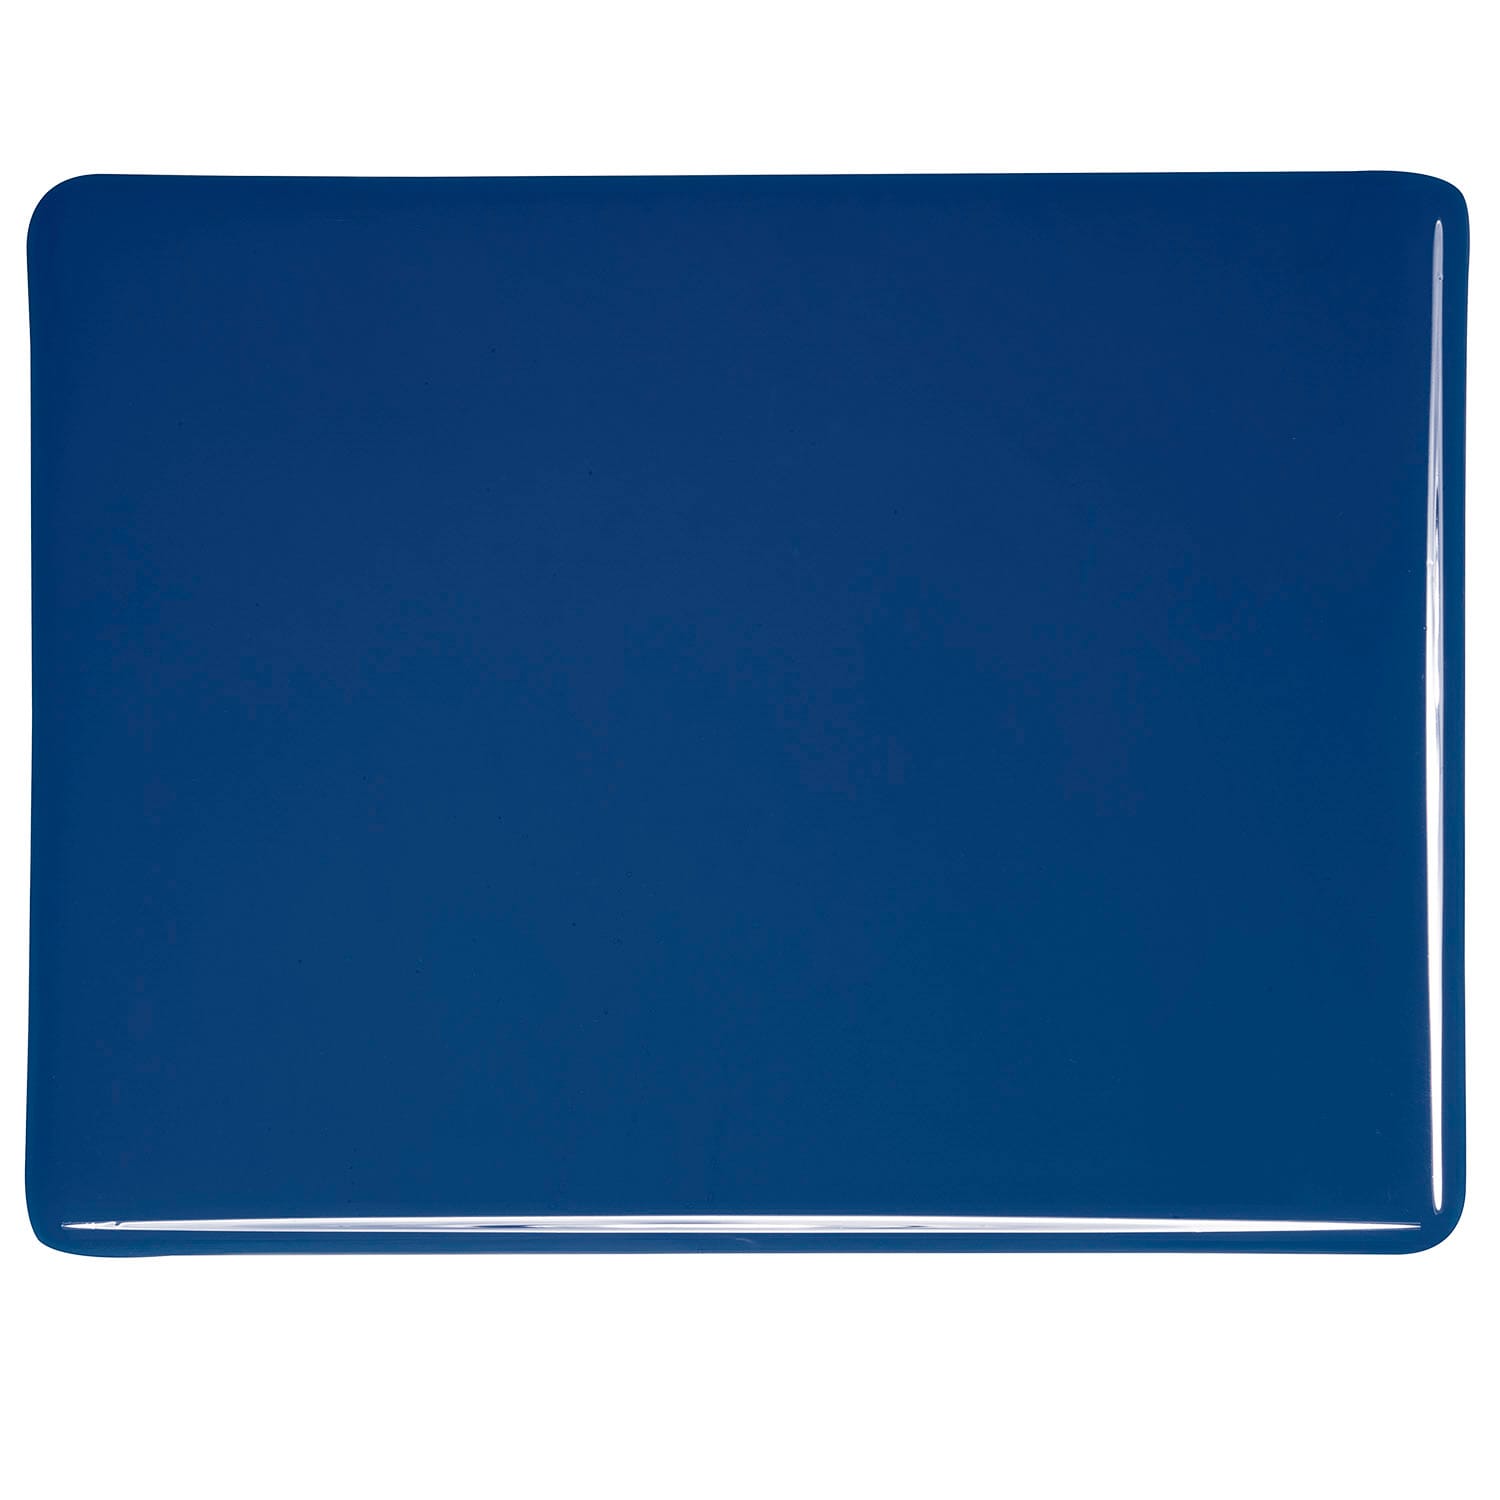 Bullseye COE90 Fusing Glass 000148 Indigo Blue Handy Sheet